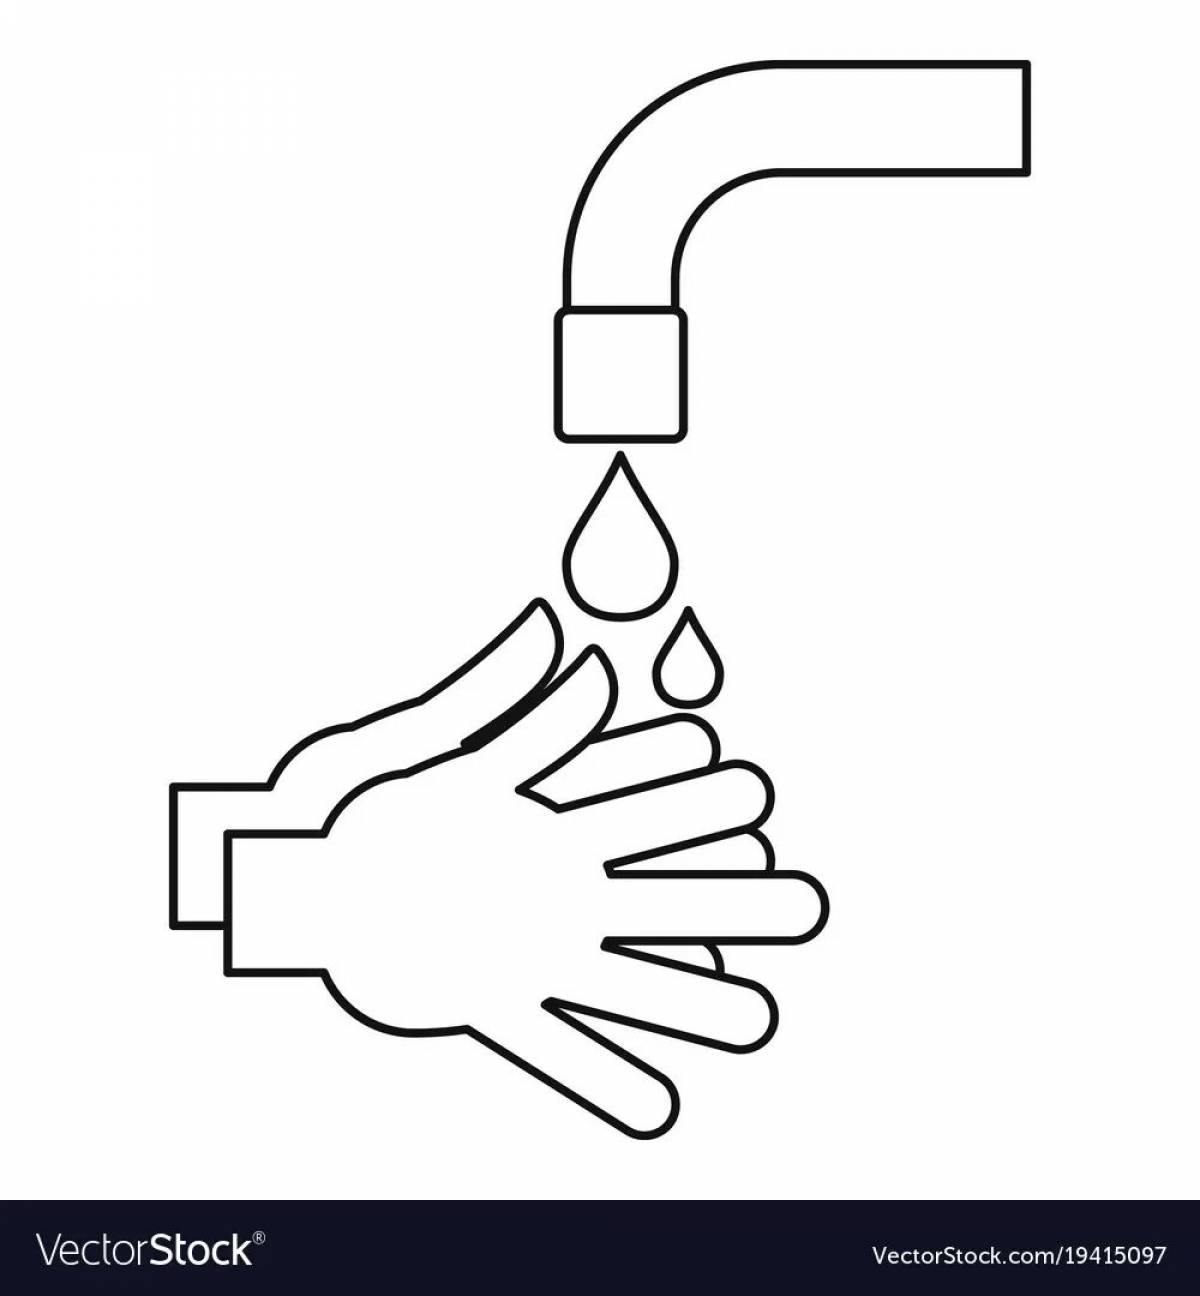 Wash hands #14